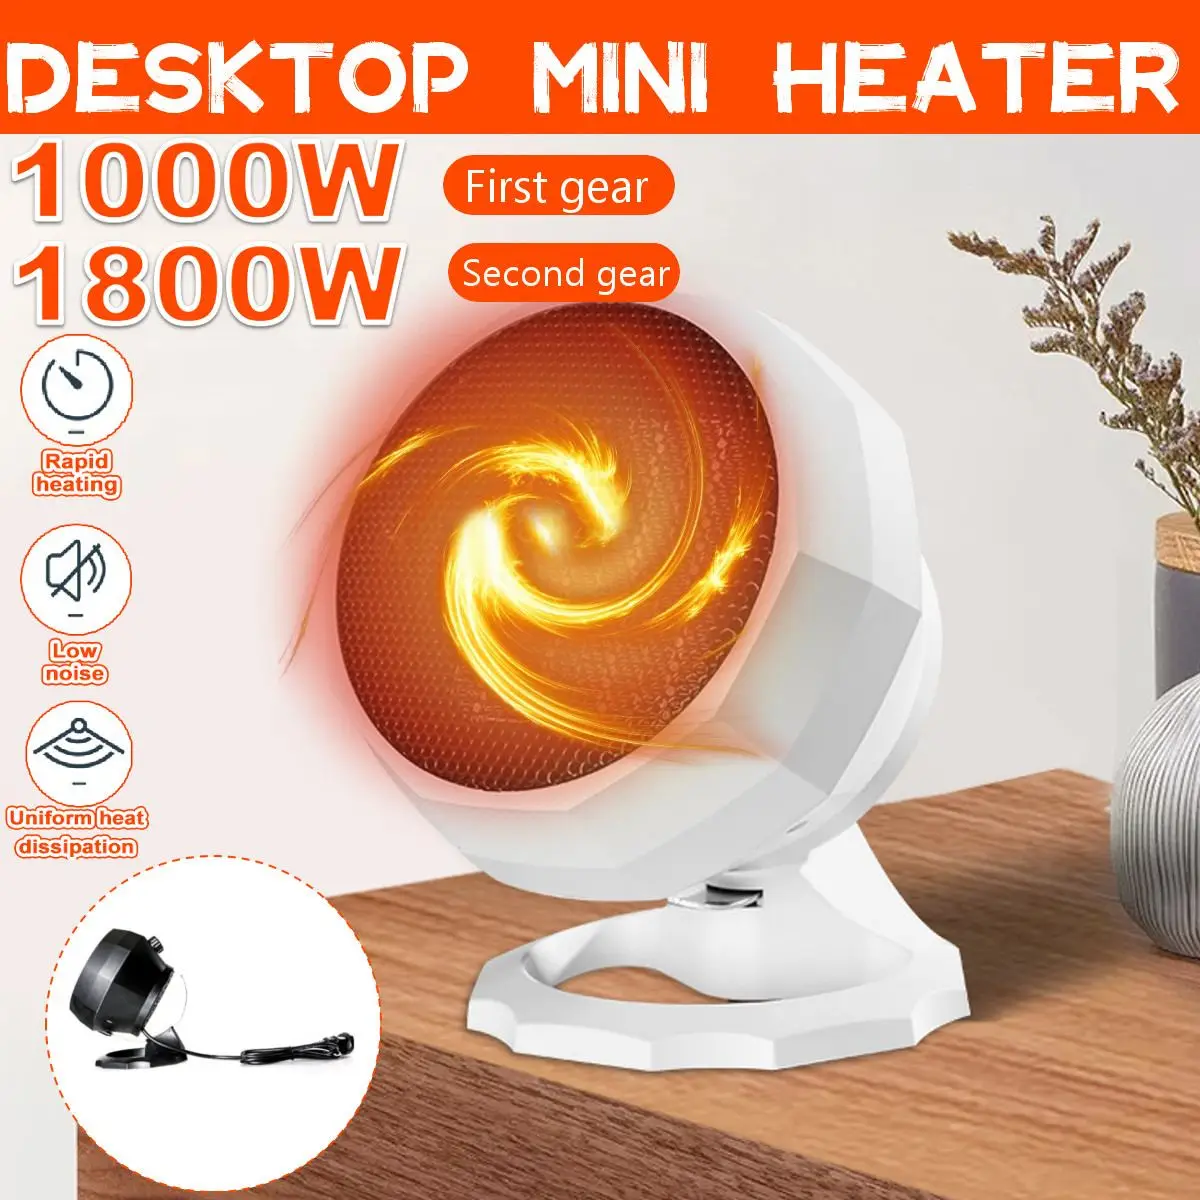 

1800W Mini Electric Heater Portable Desktop Fan Heater Safe Quiet PTC Ceramic Heating Warm Air Blower Home Office Warmer Machine